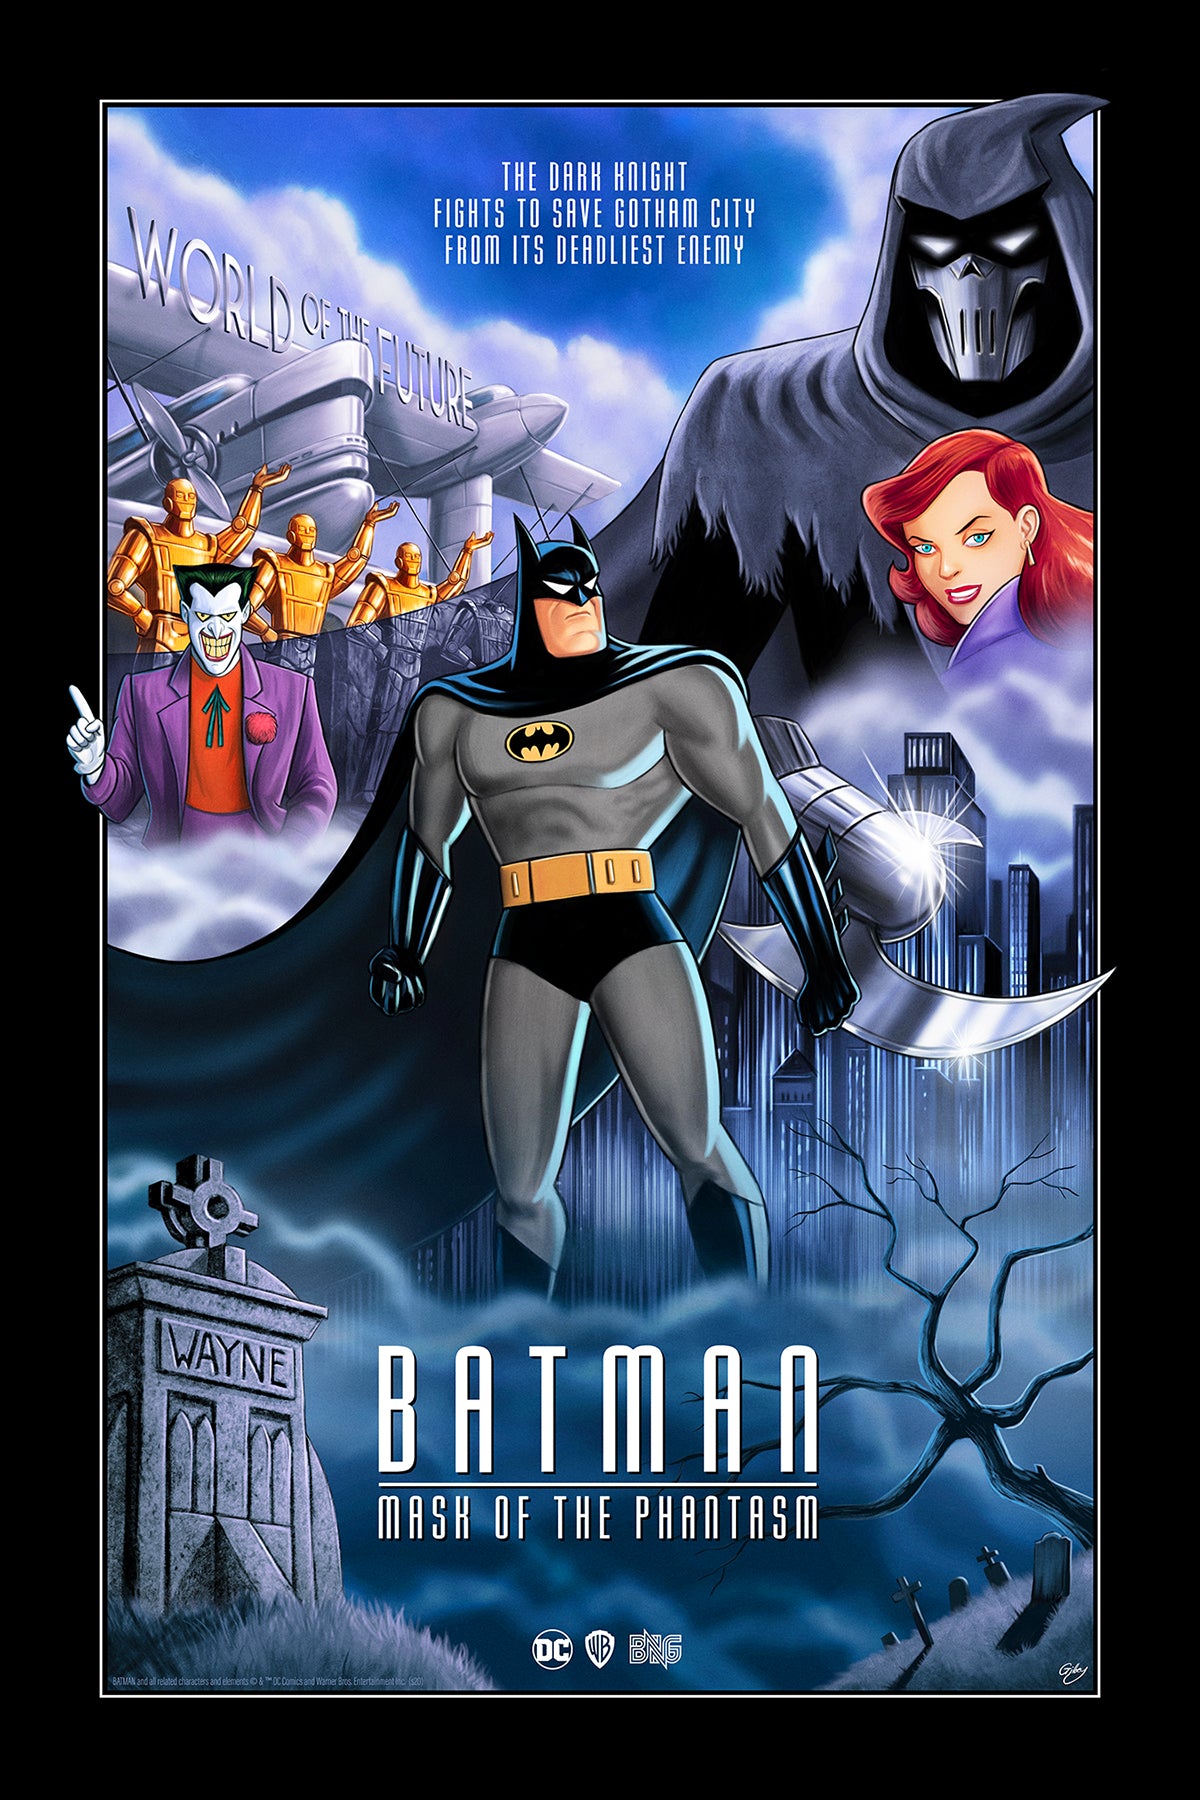 Sam Gilbey "Batman: Mask of the Phantasm"